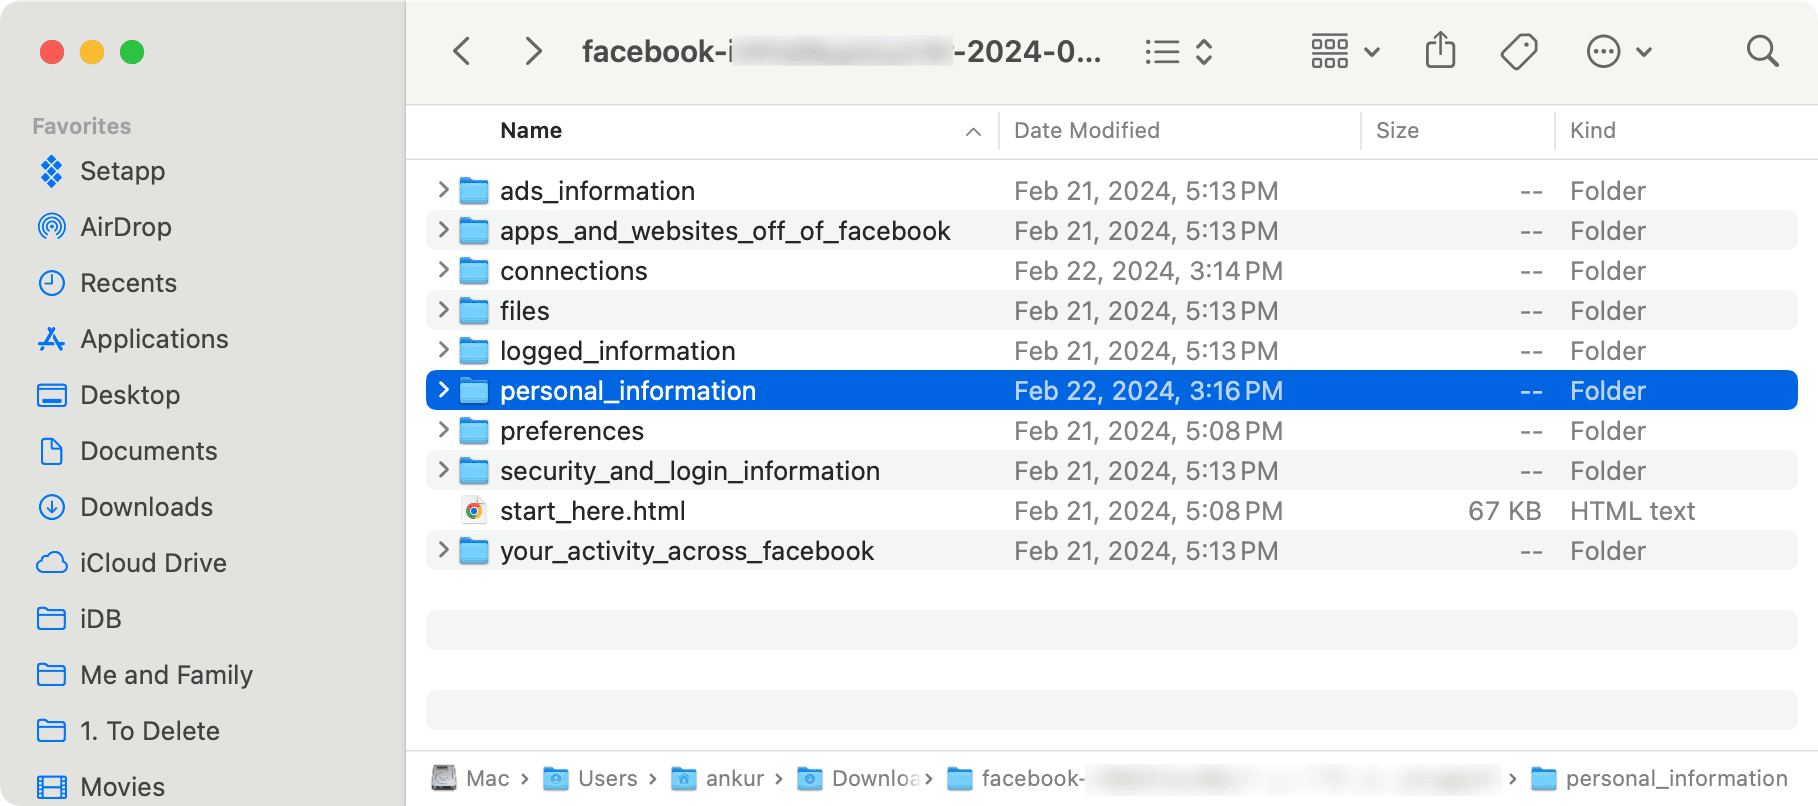 personal_information folder in Facebook downloaded data